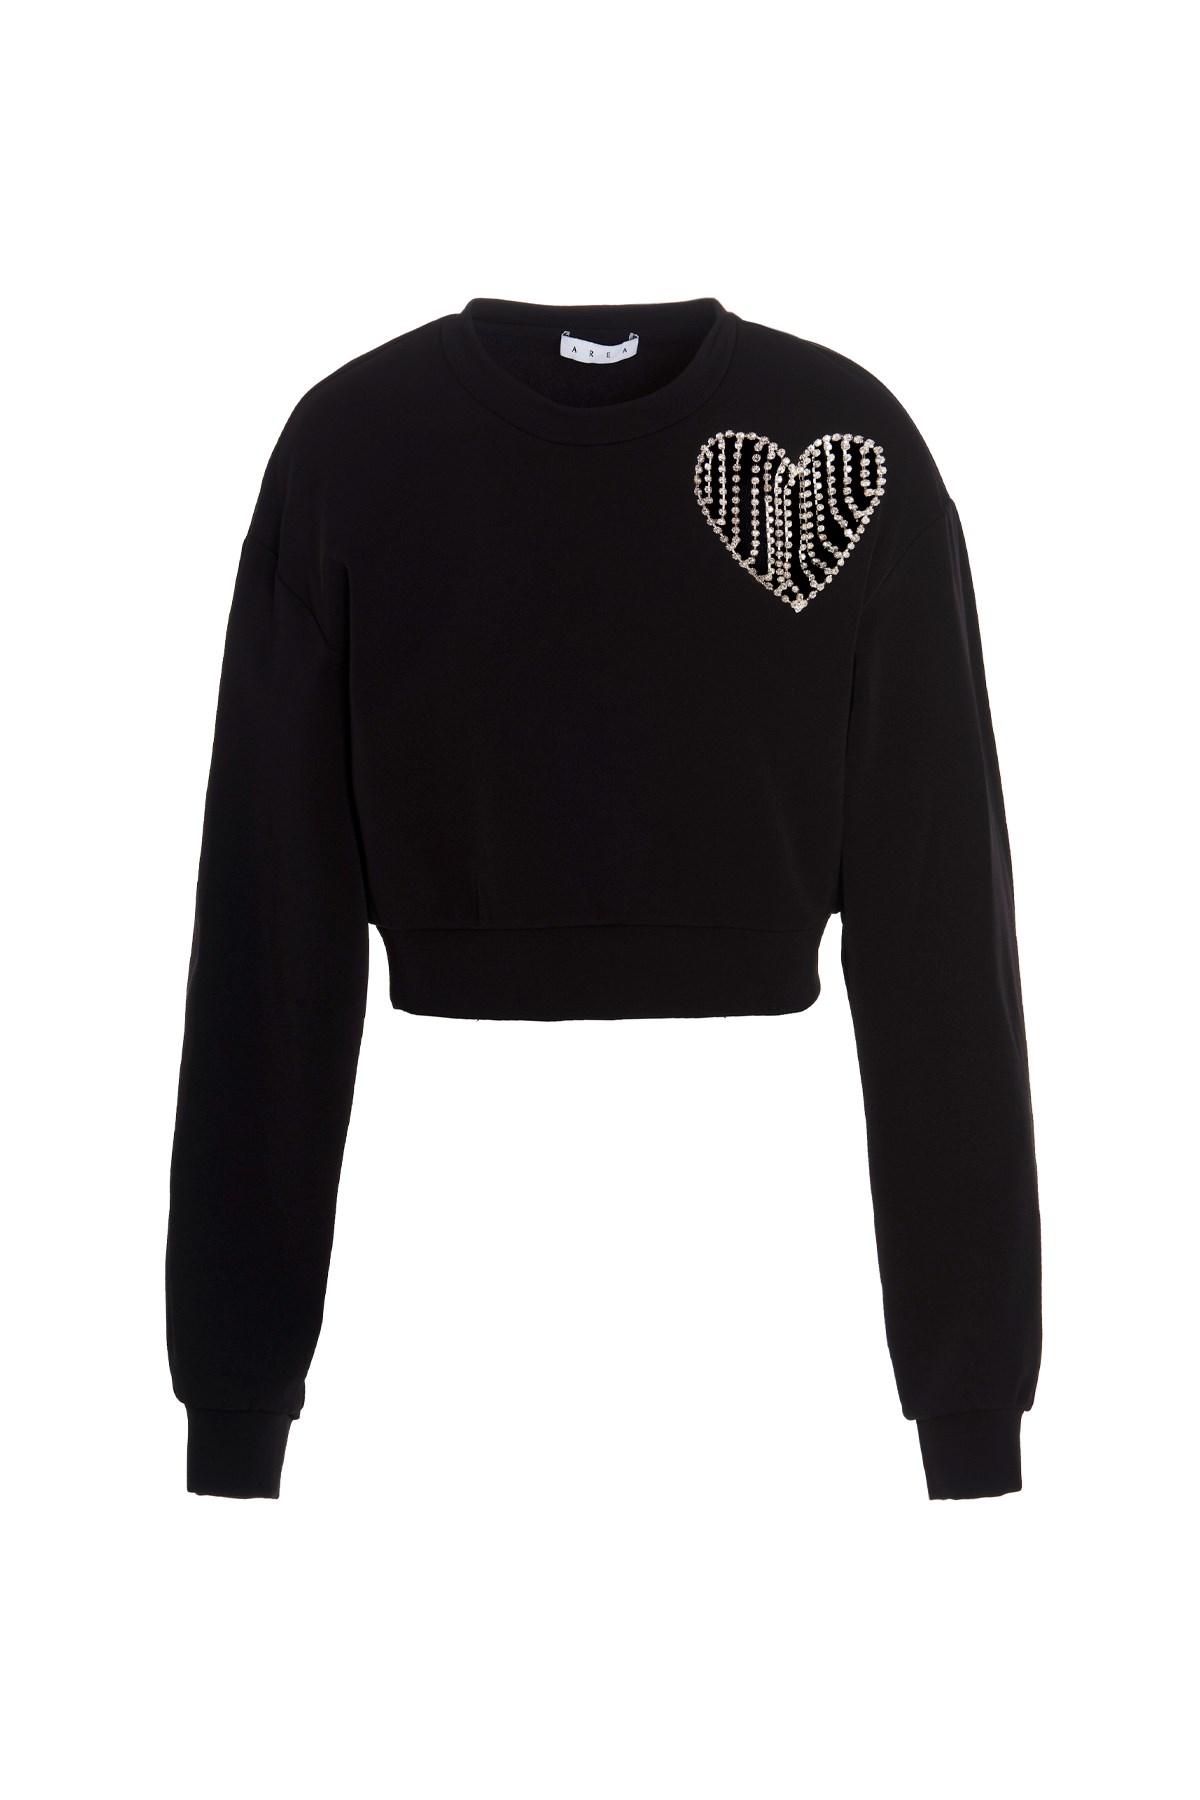 AREA Sweatshirt 'Heart Cutout'